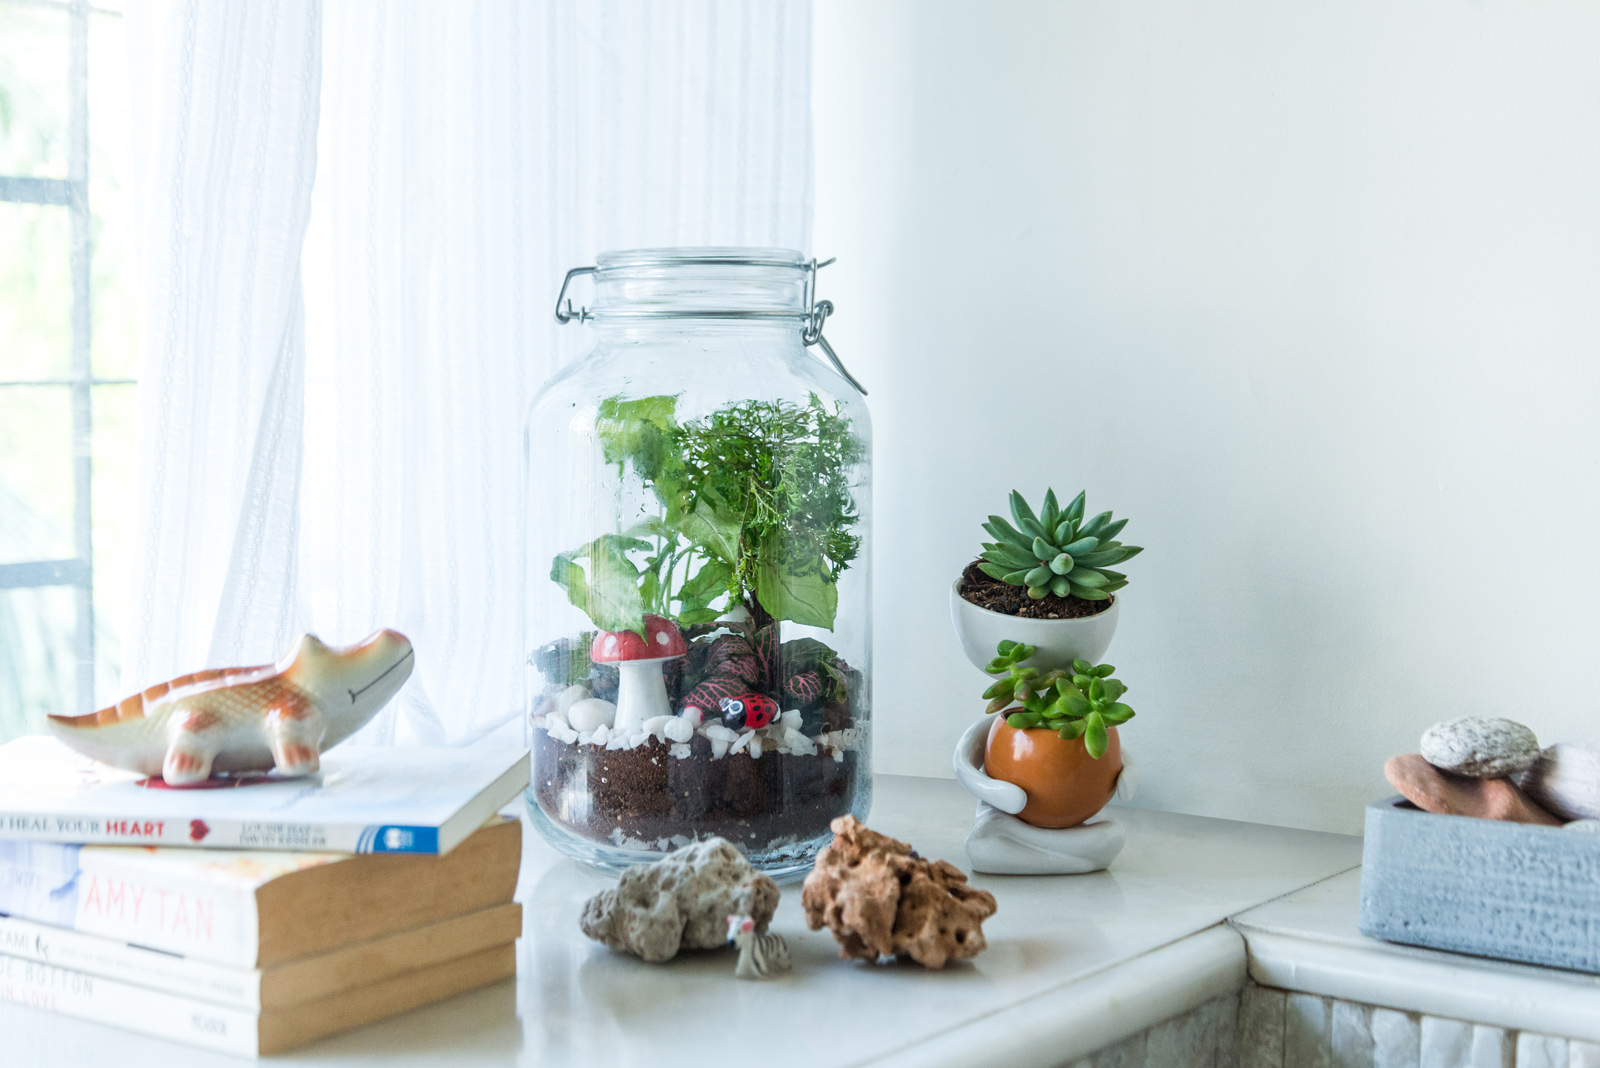 How to treat your terrarium, Gardening advice